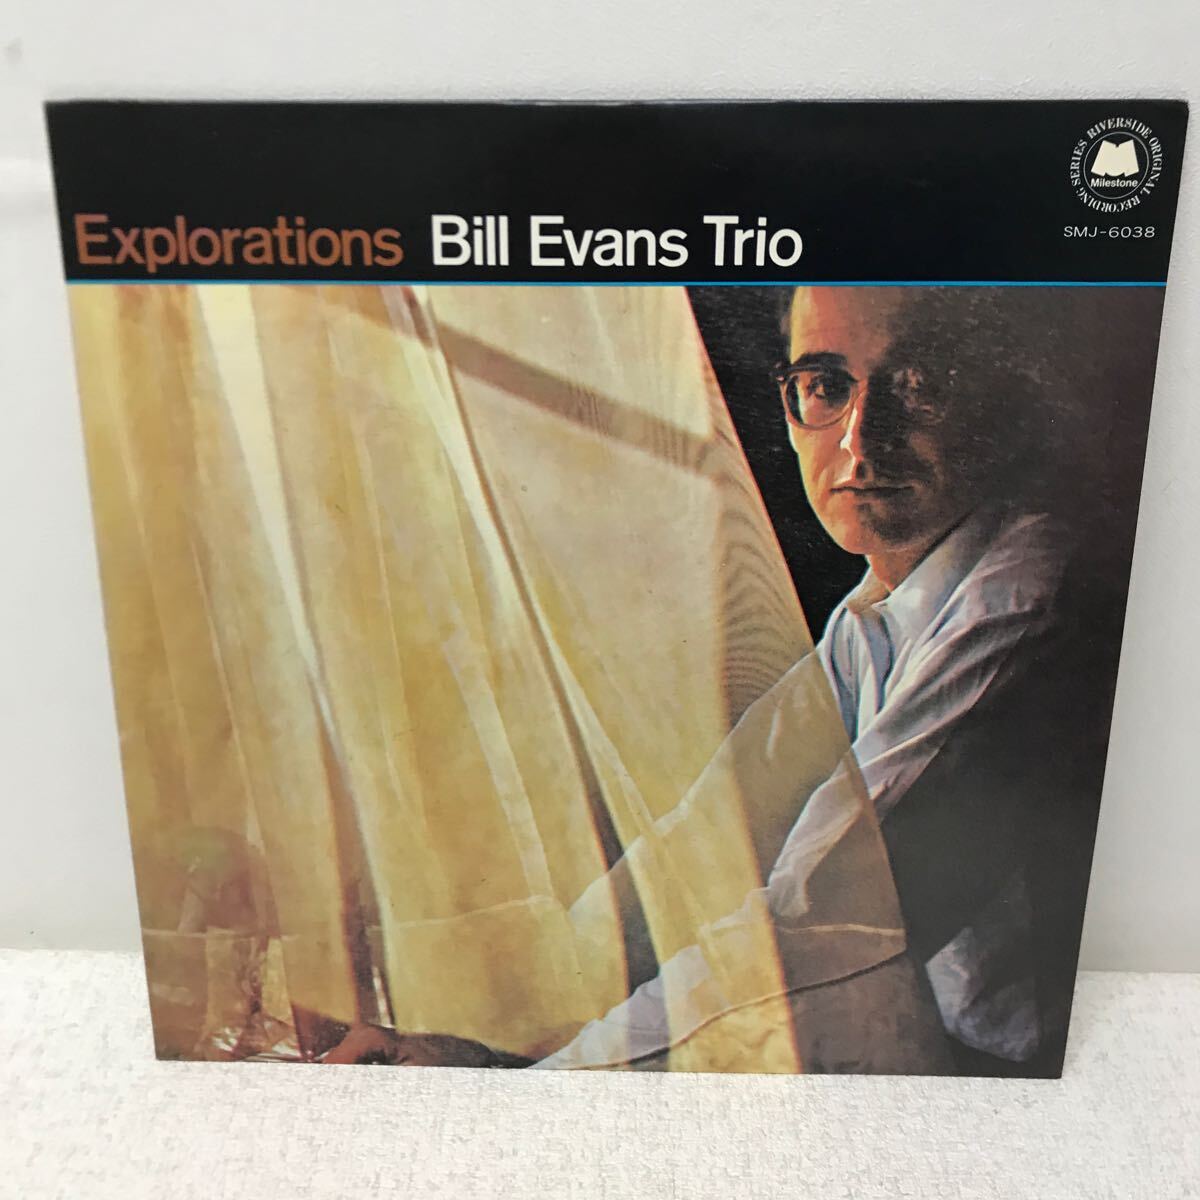 I0517A3 ビル・エヴァンス BILL EVANS LP レコード 2巻セット 音楽 洋楽 ジャズ JAZZ 国内盤 / New JAZZ Conceptions / EXPLORATIONS_画像2